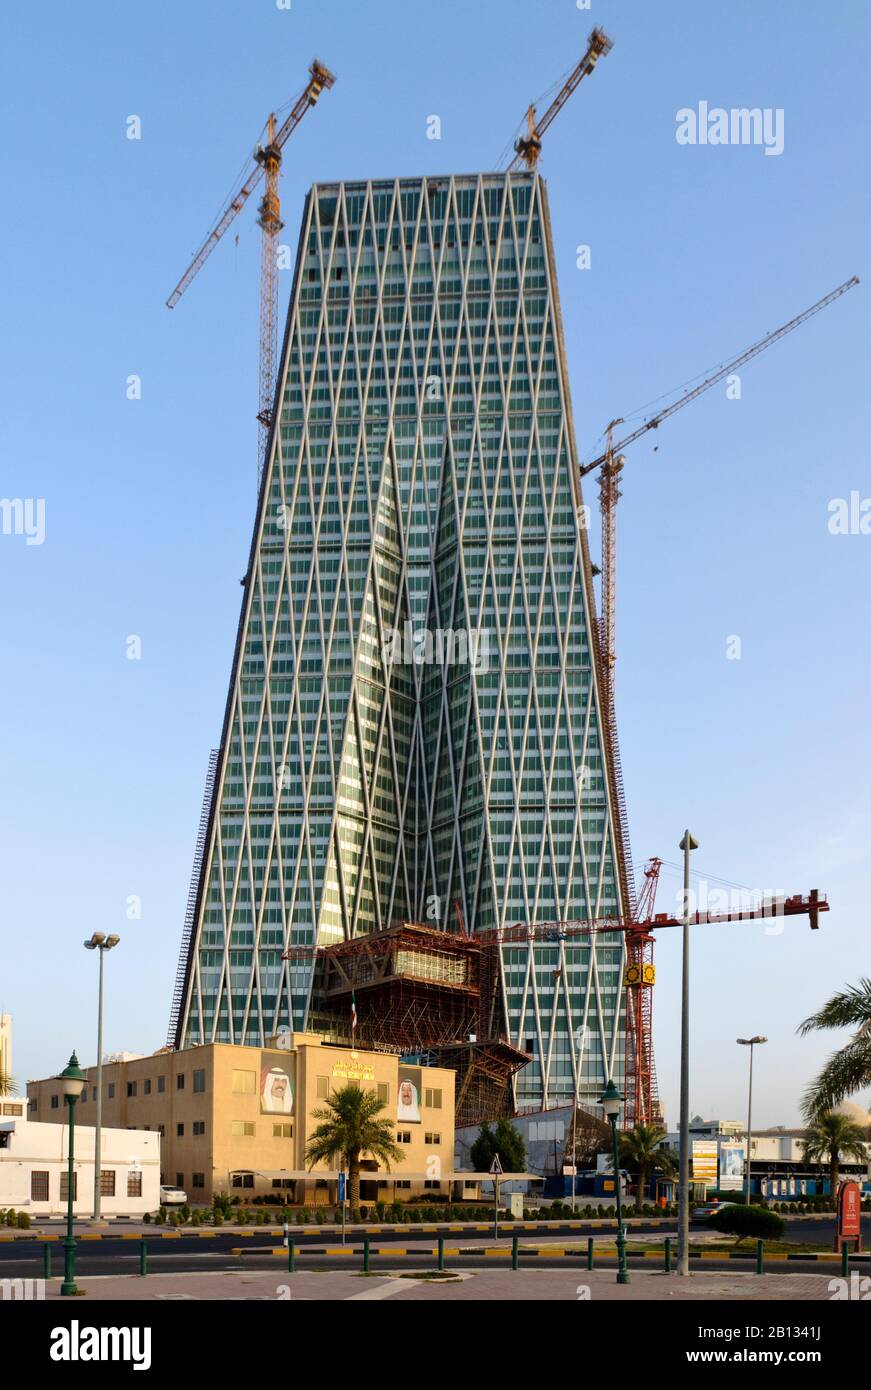 Gratte-ciel en construction, Koweït, Pensinula arabe, Asie occidentale Banque D'Images